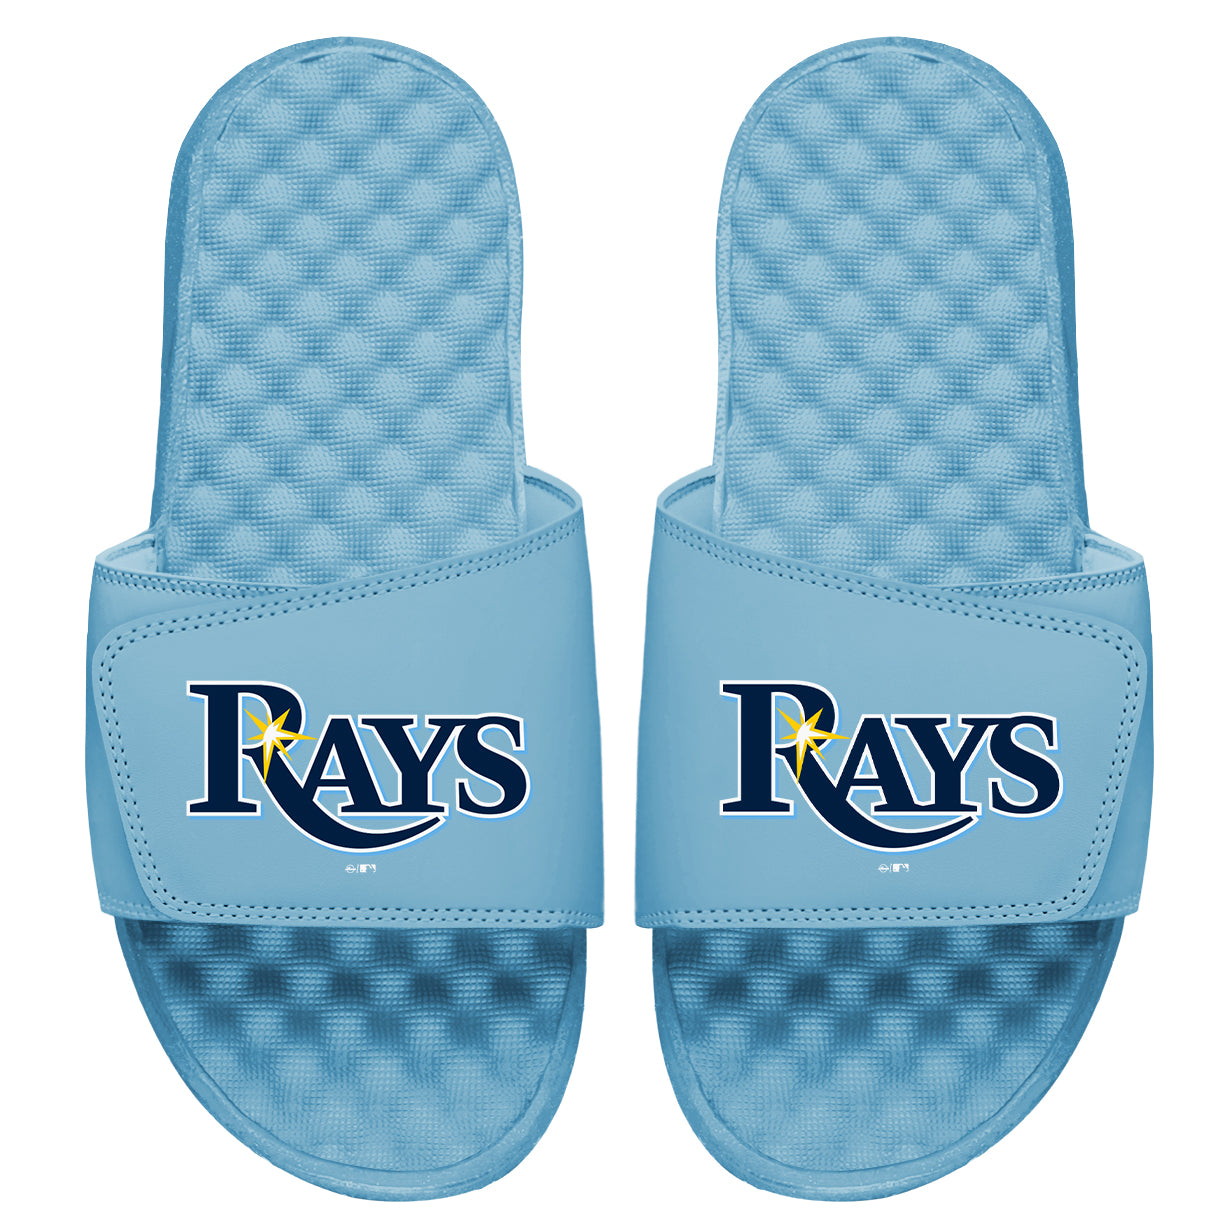 Rays Primary UNC Blue Slides